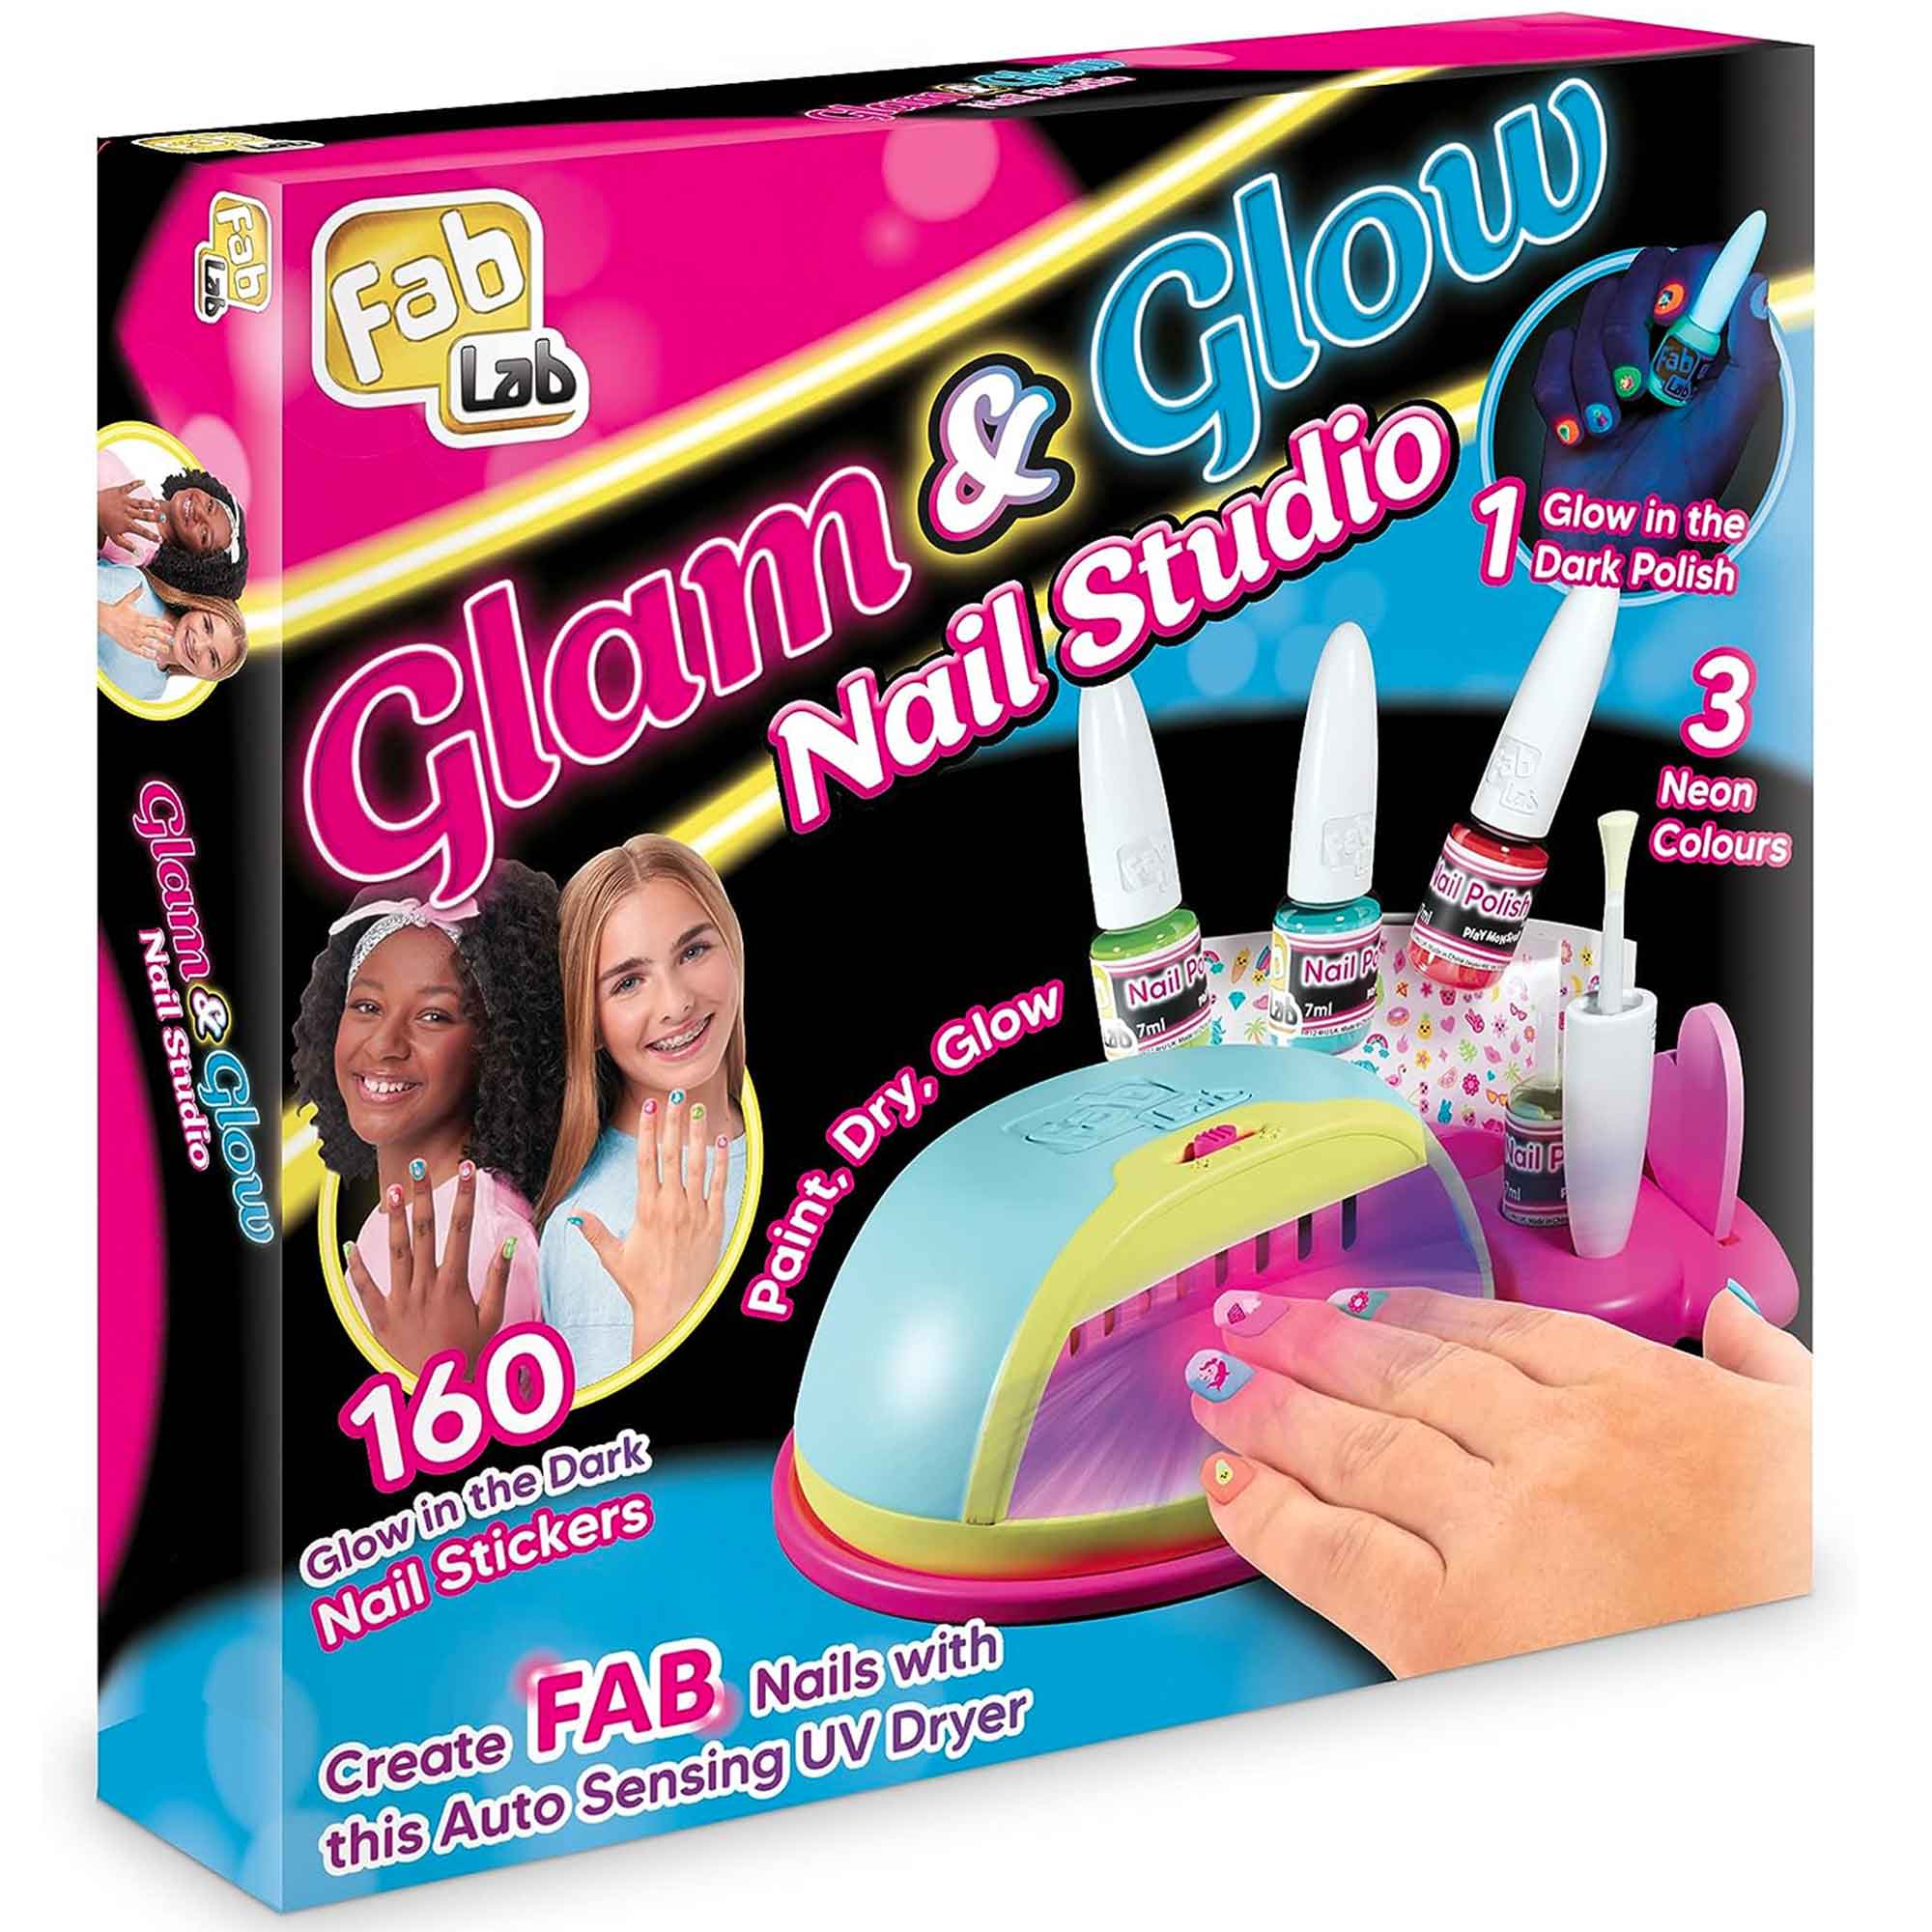 FabLab Glam & Glow Nail Studio from Wowow Toys